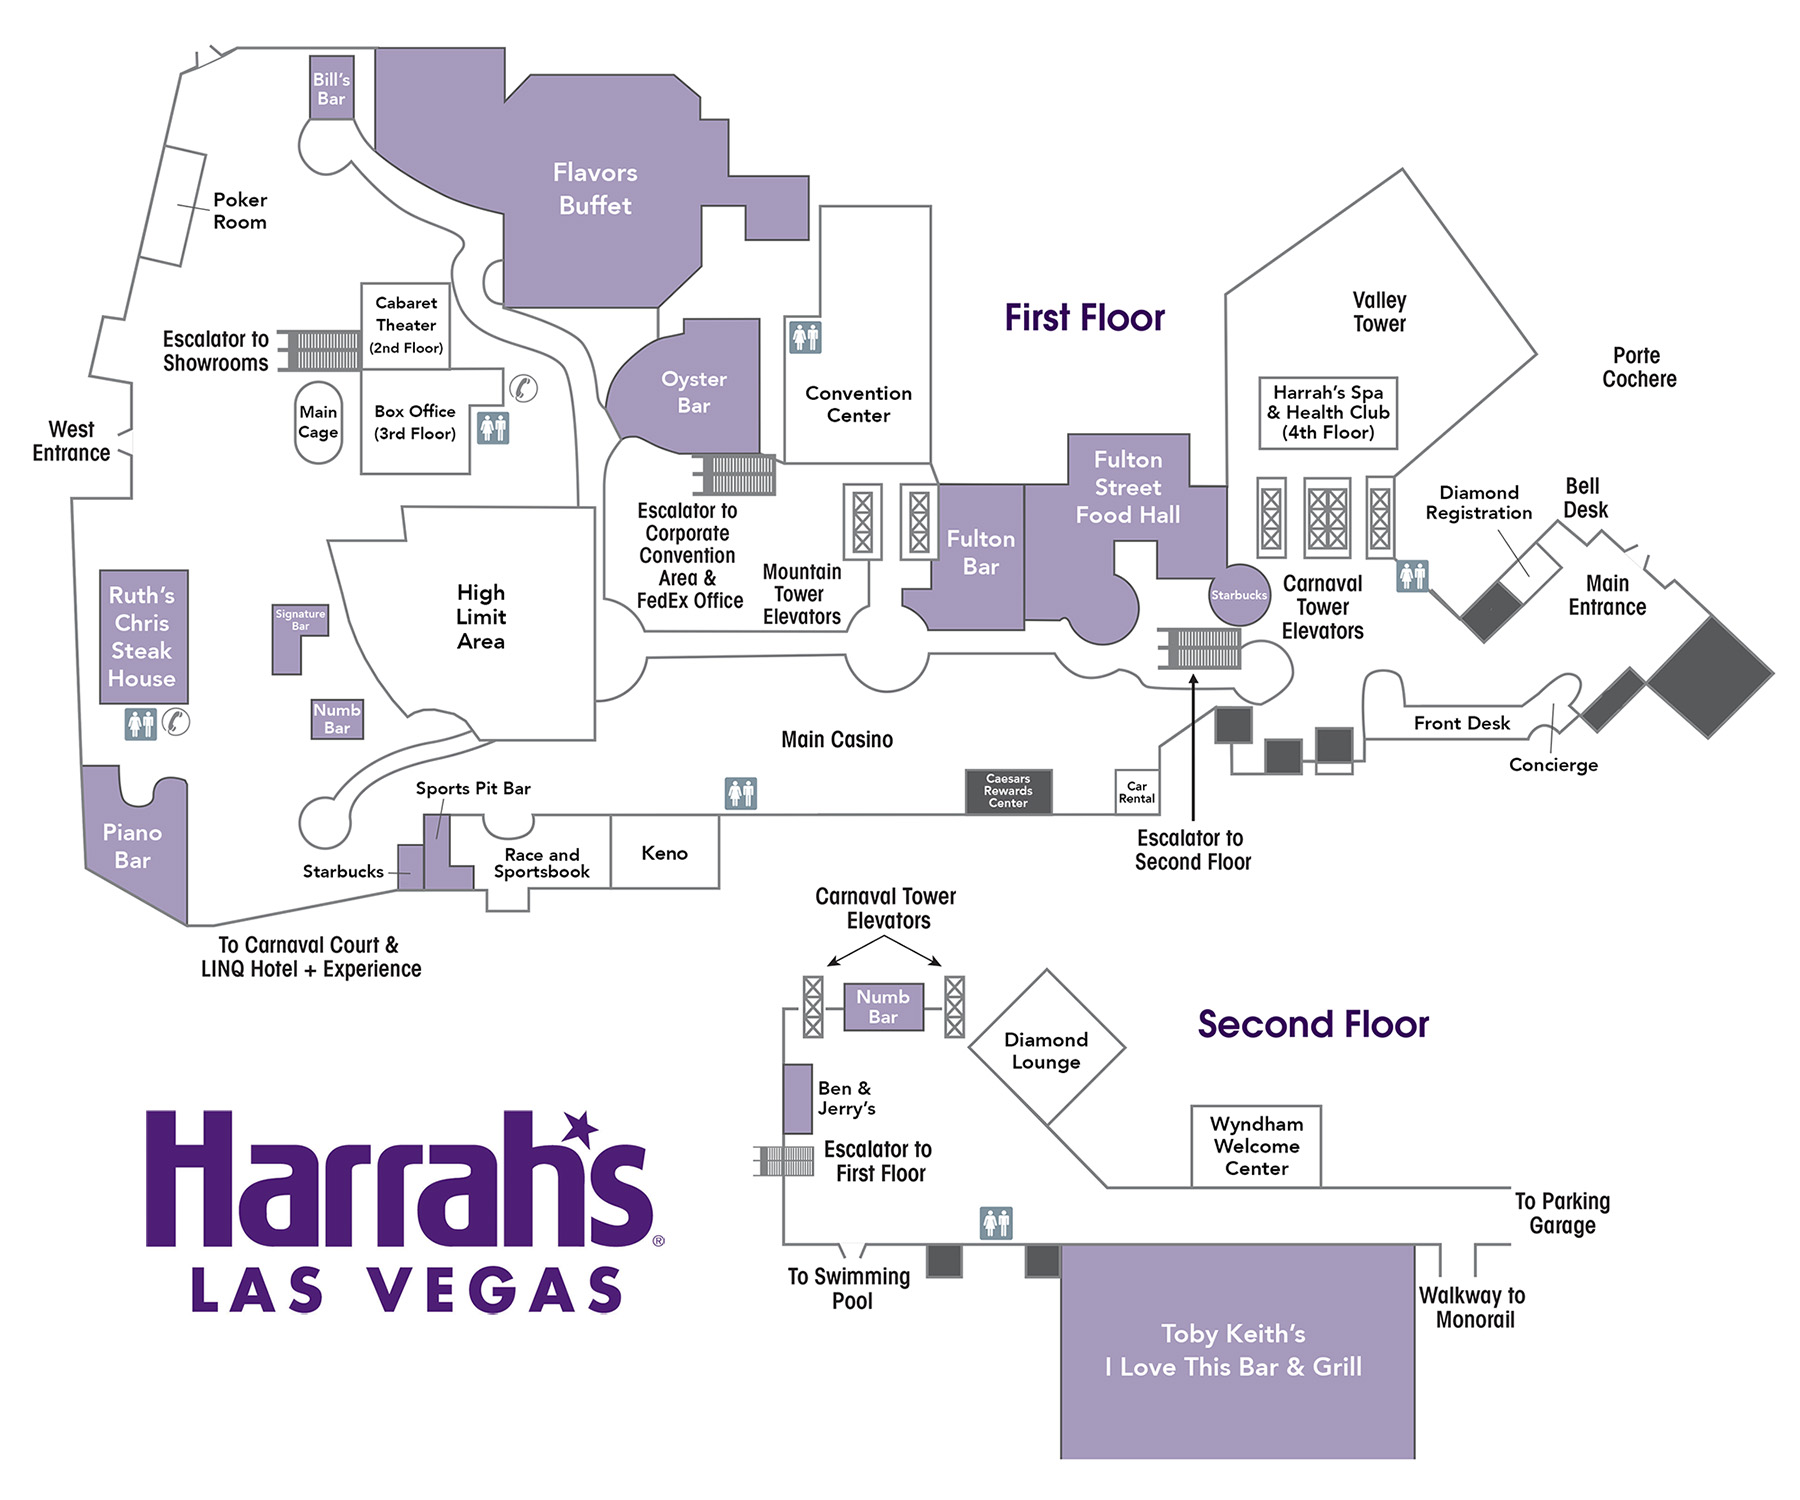 Harrah's Casino Property Map & Floor Plans Las Vegas